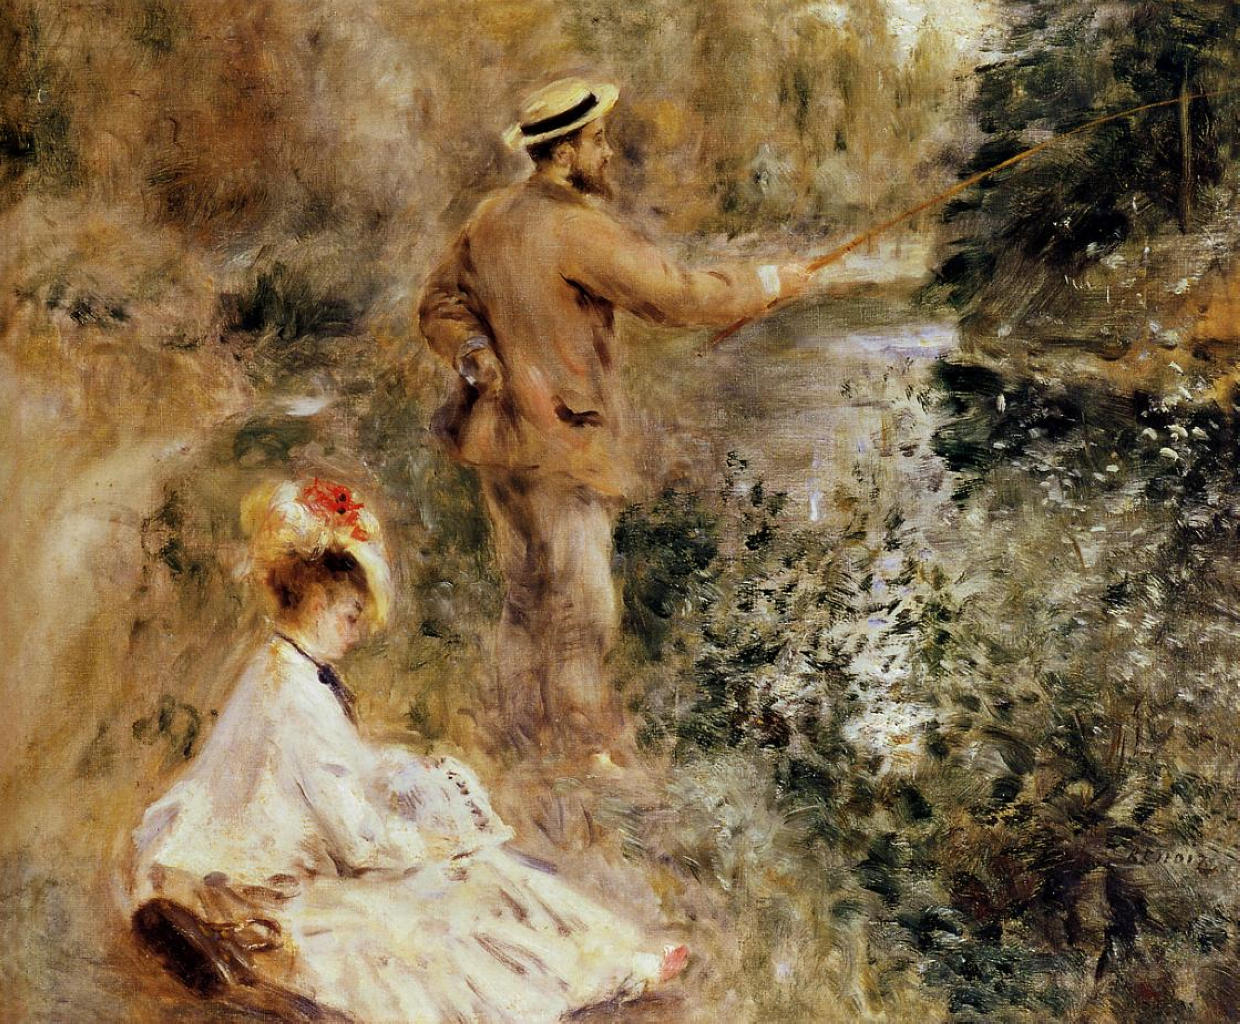 The Fisherman - Pierre-Auguste Renoir painting on canvas